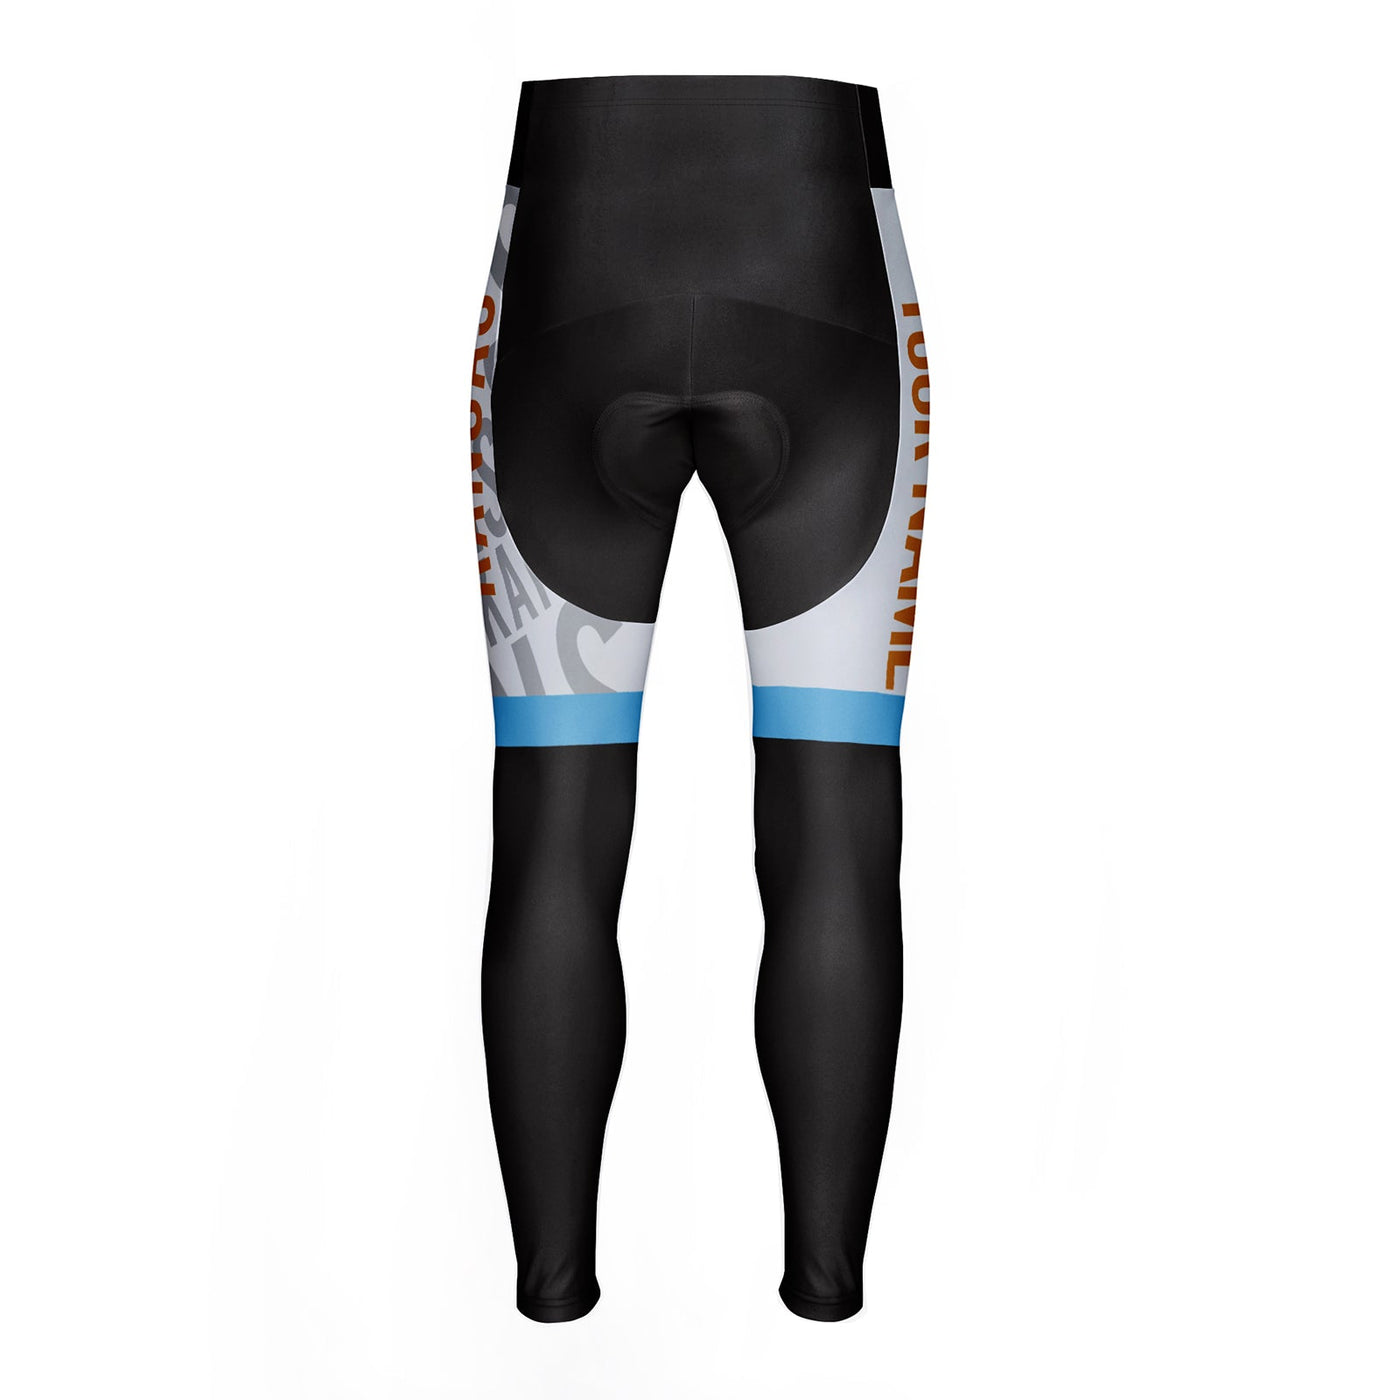 Customized Kansas Unisex Thermal Fleece Cycling Tights Long Pants